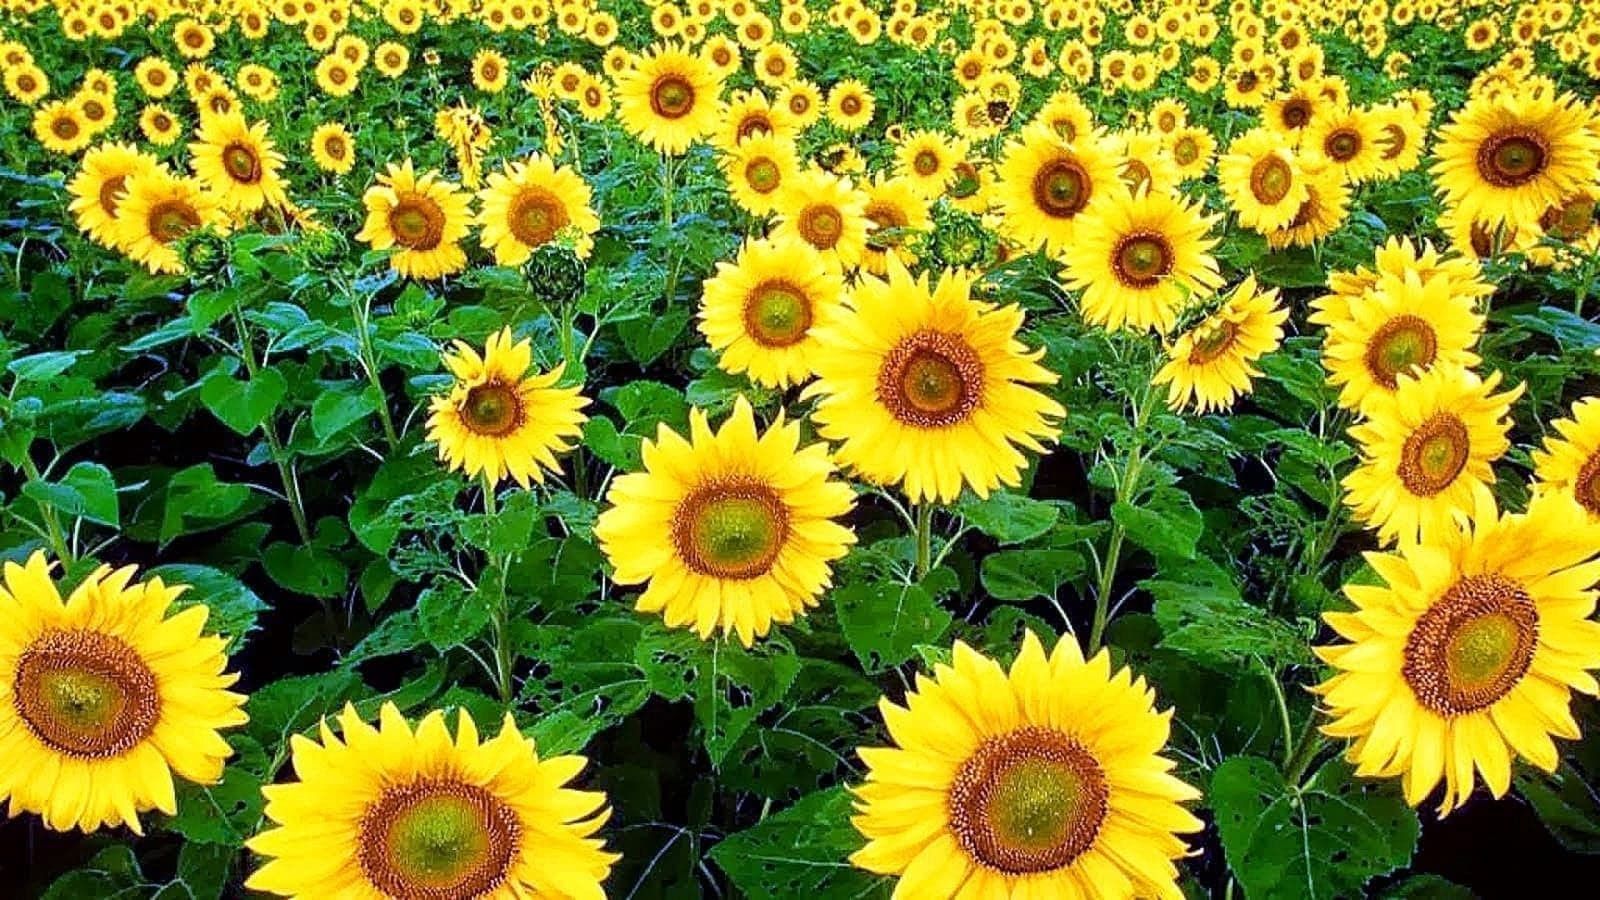 HD Wallpaper Of Sunflowers